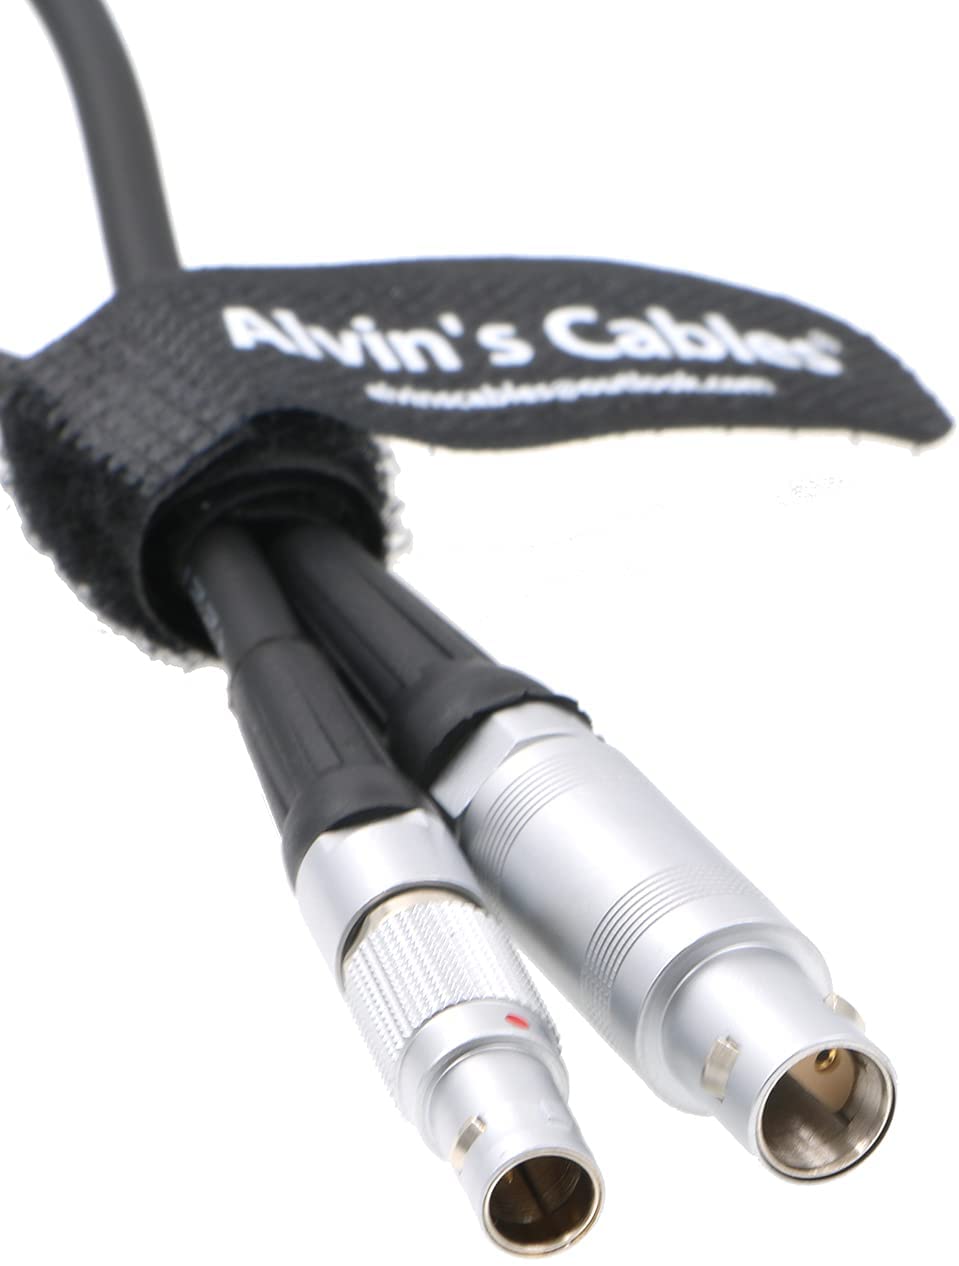 Alvin's Cables 1S.303 auf 2 Pin Male Stromkabel für Bartech Focus Device Receiver Artemis Letus Redrock Hedén Steadicam von Sachtler Artemis